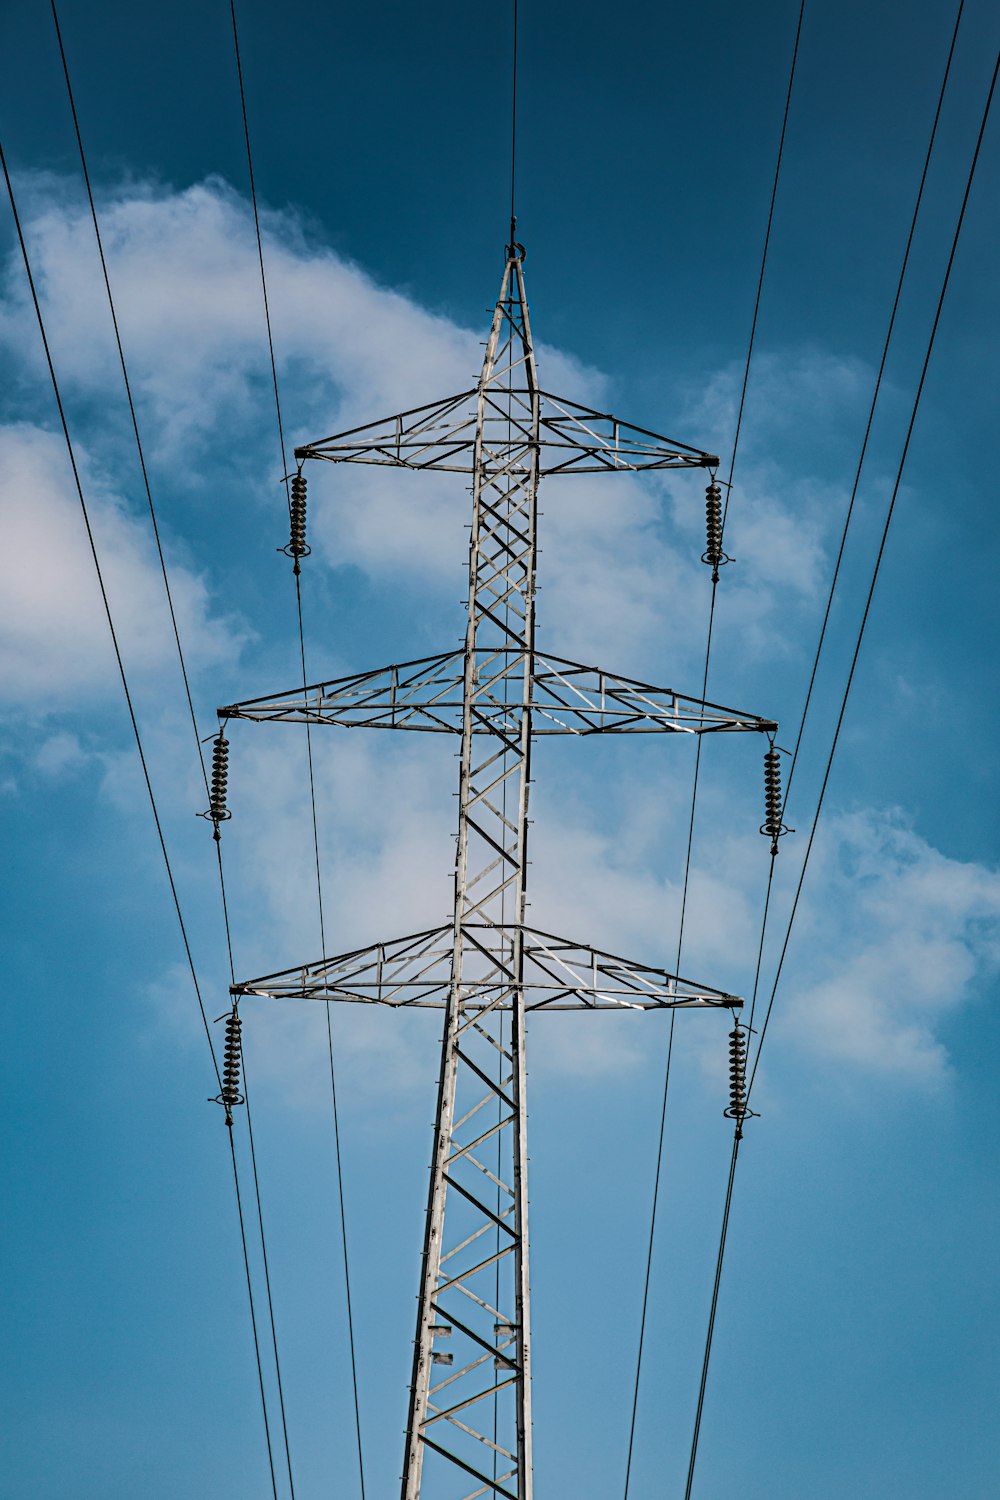 a high voltage power line against a blue sky